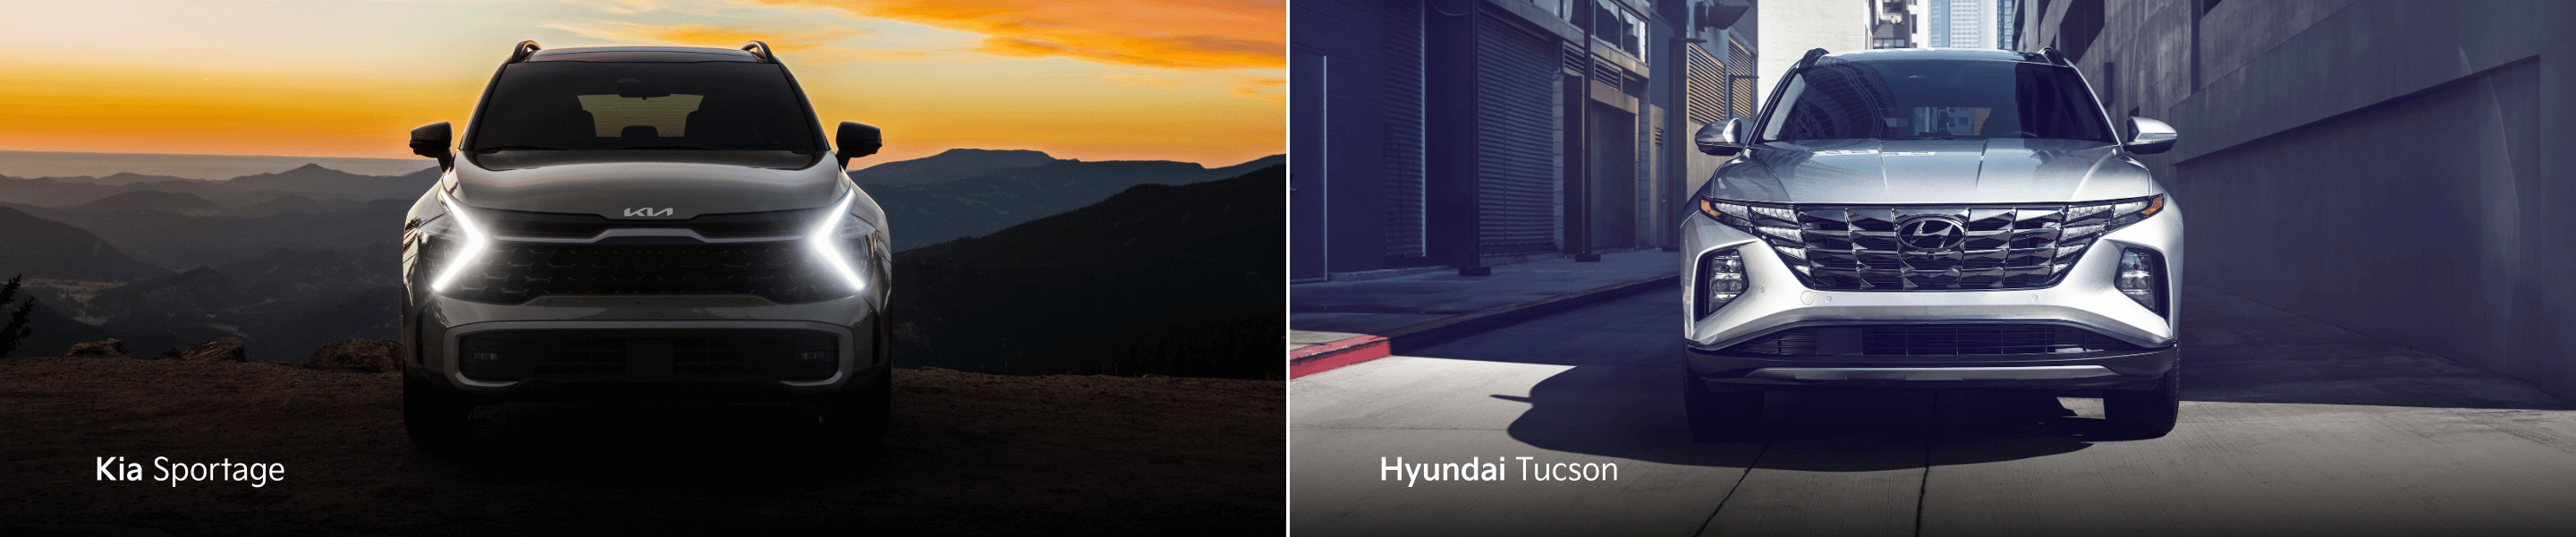 Kia Sportage vs. Hyundai Tucson